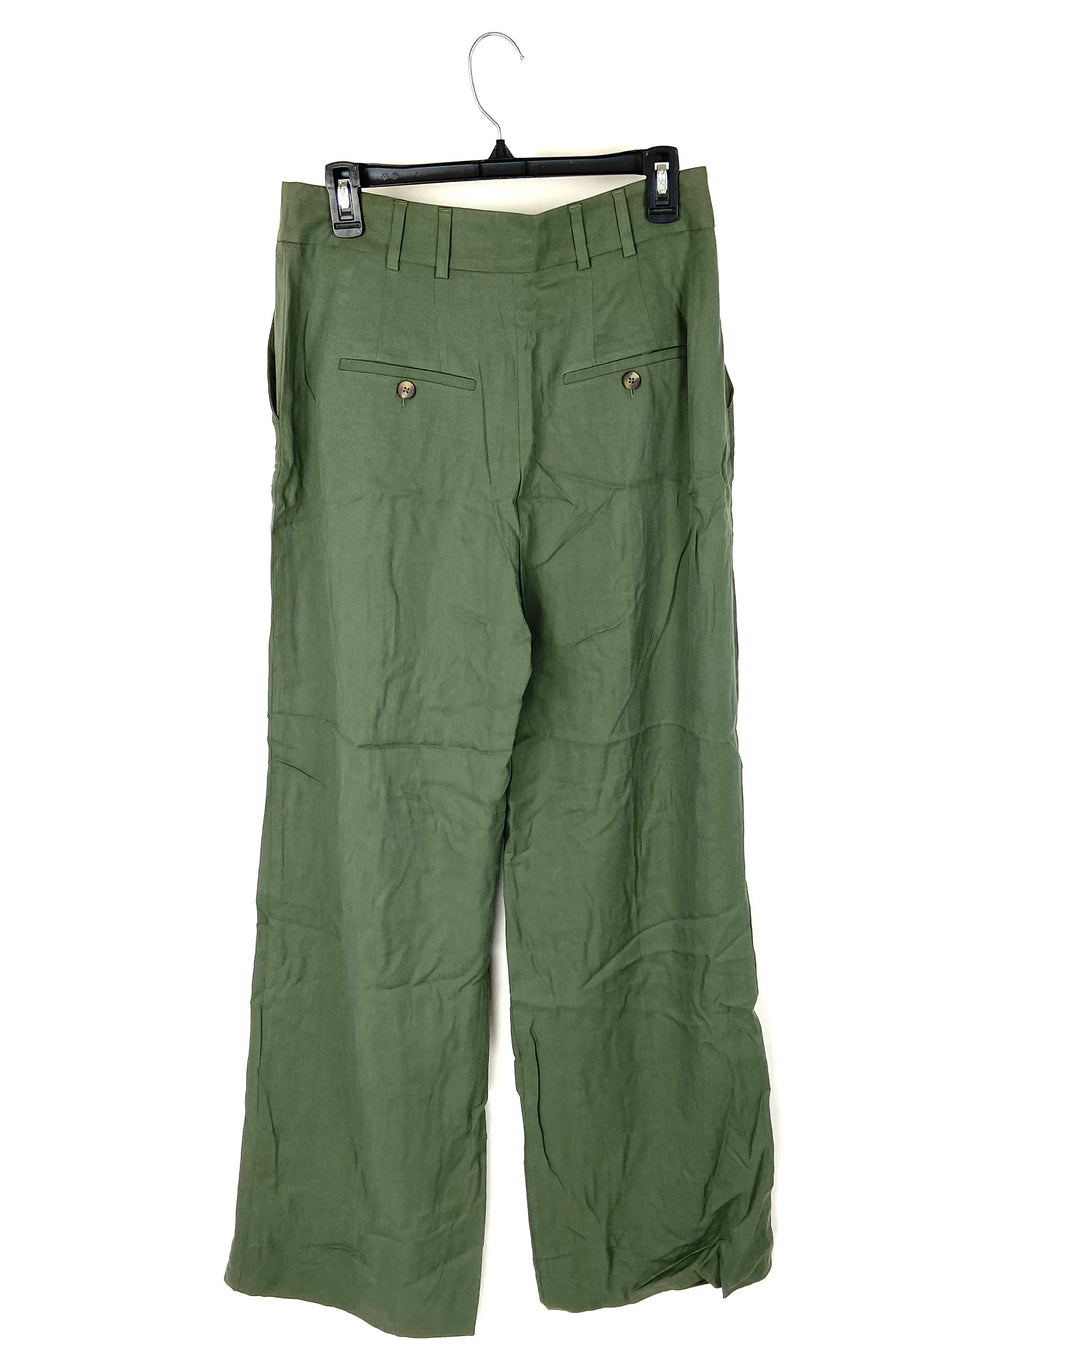 Olive Green Khaki Pants - Size 12 Long